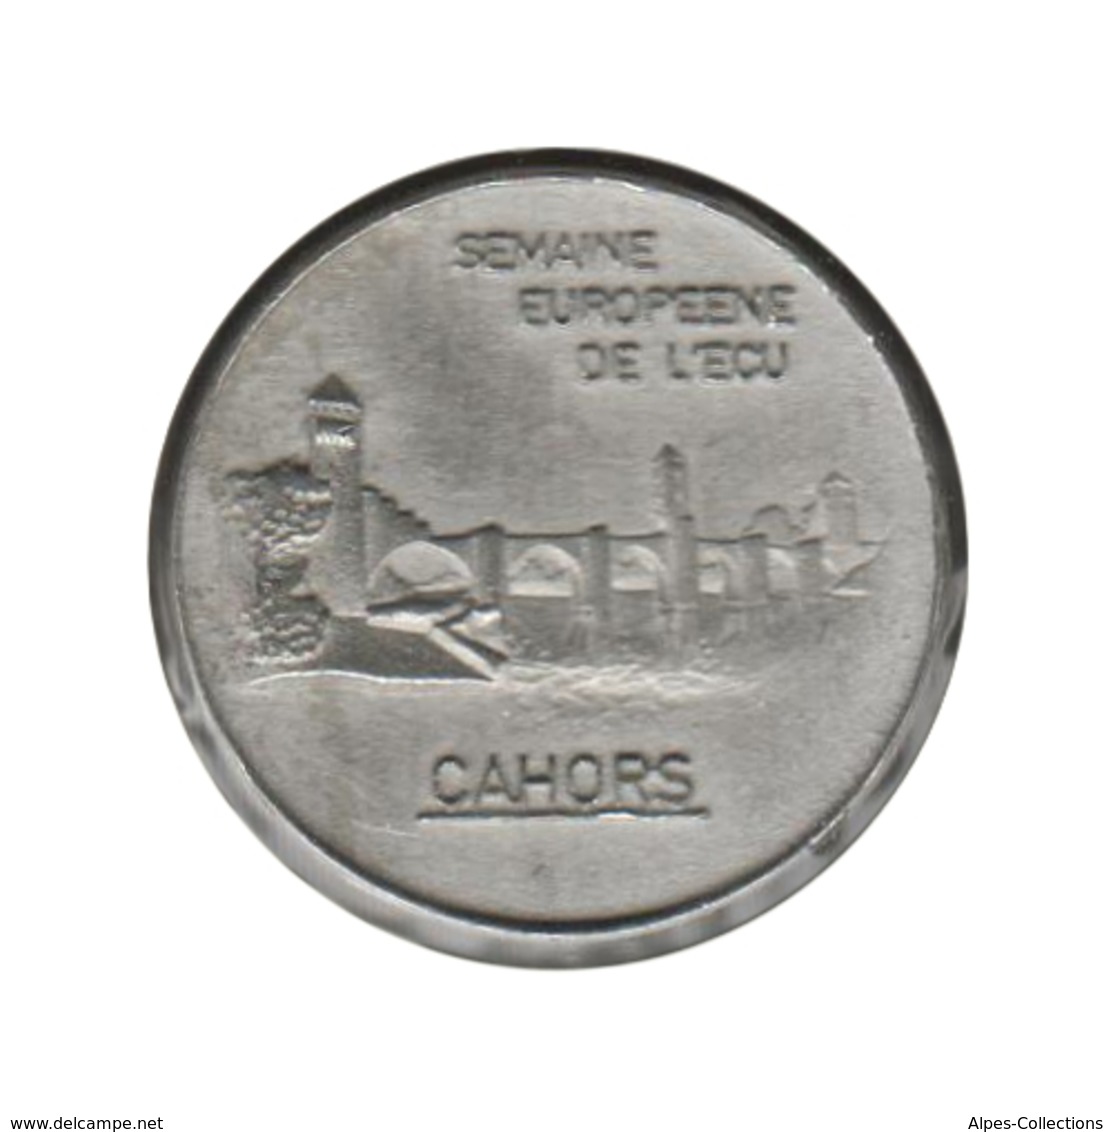 CAHORS - EC0010.1 - 1 ECU DES VILLES - Réf: NR - 1992 - Euros Of The Cities